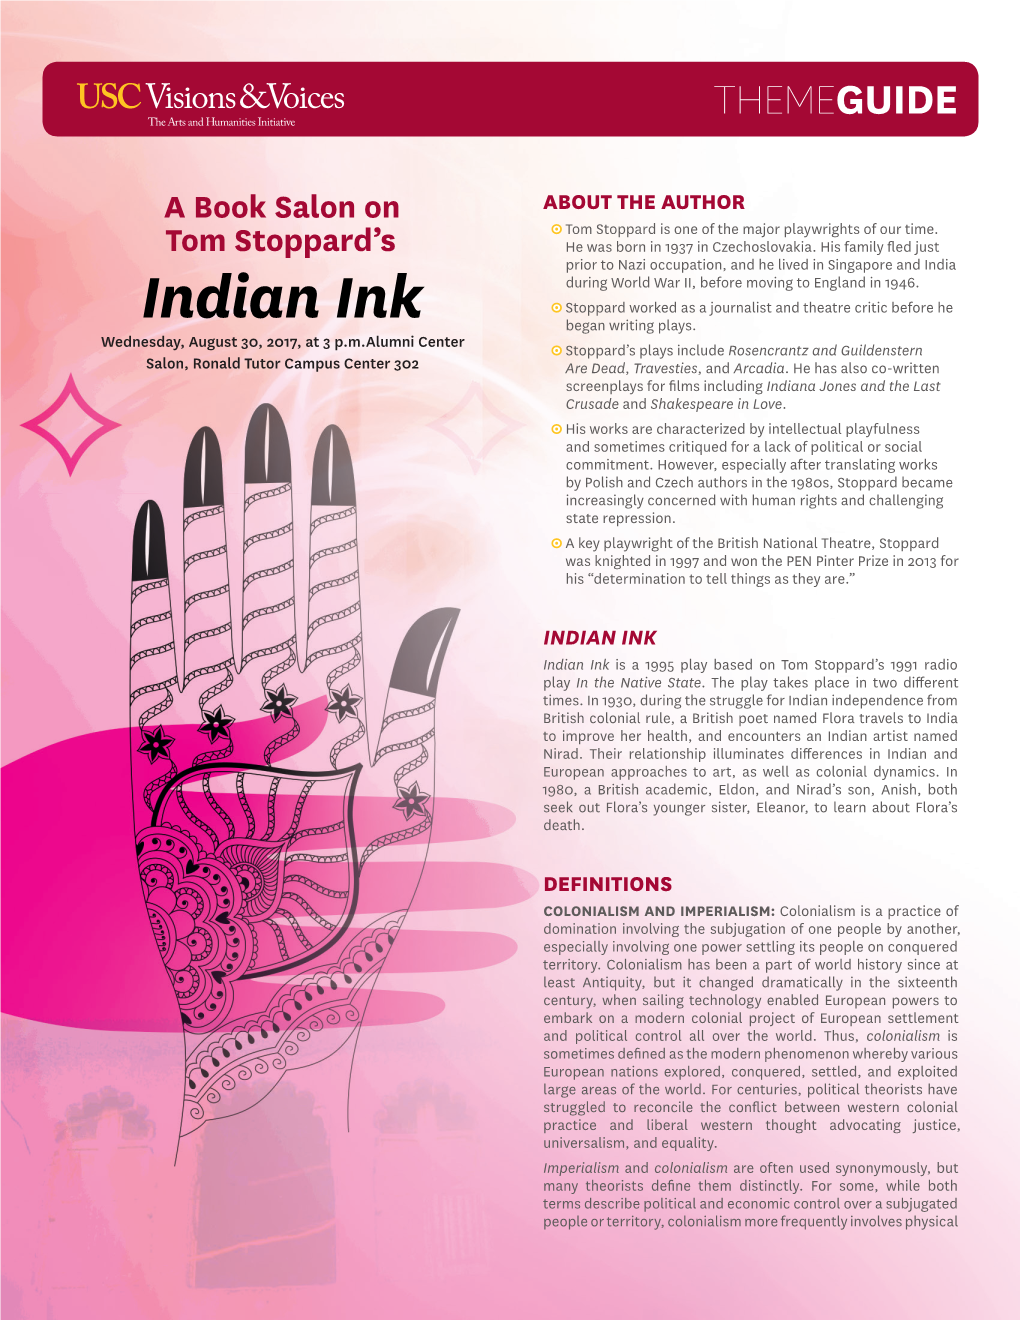 Indian Ink Began Writing Plays